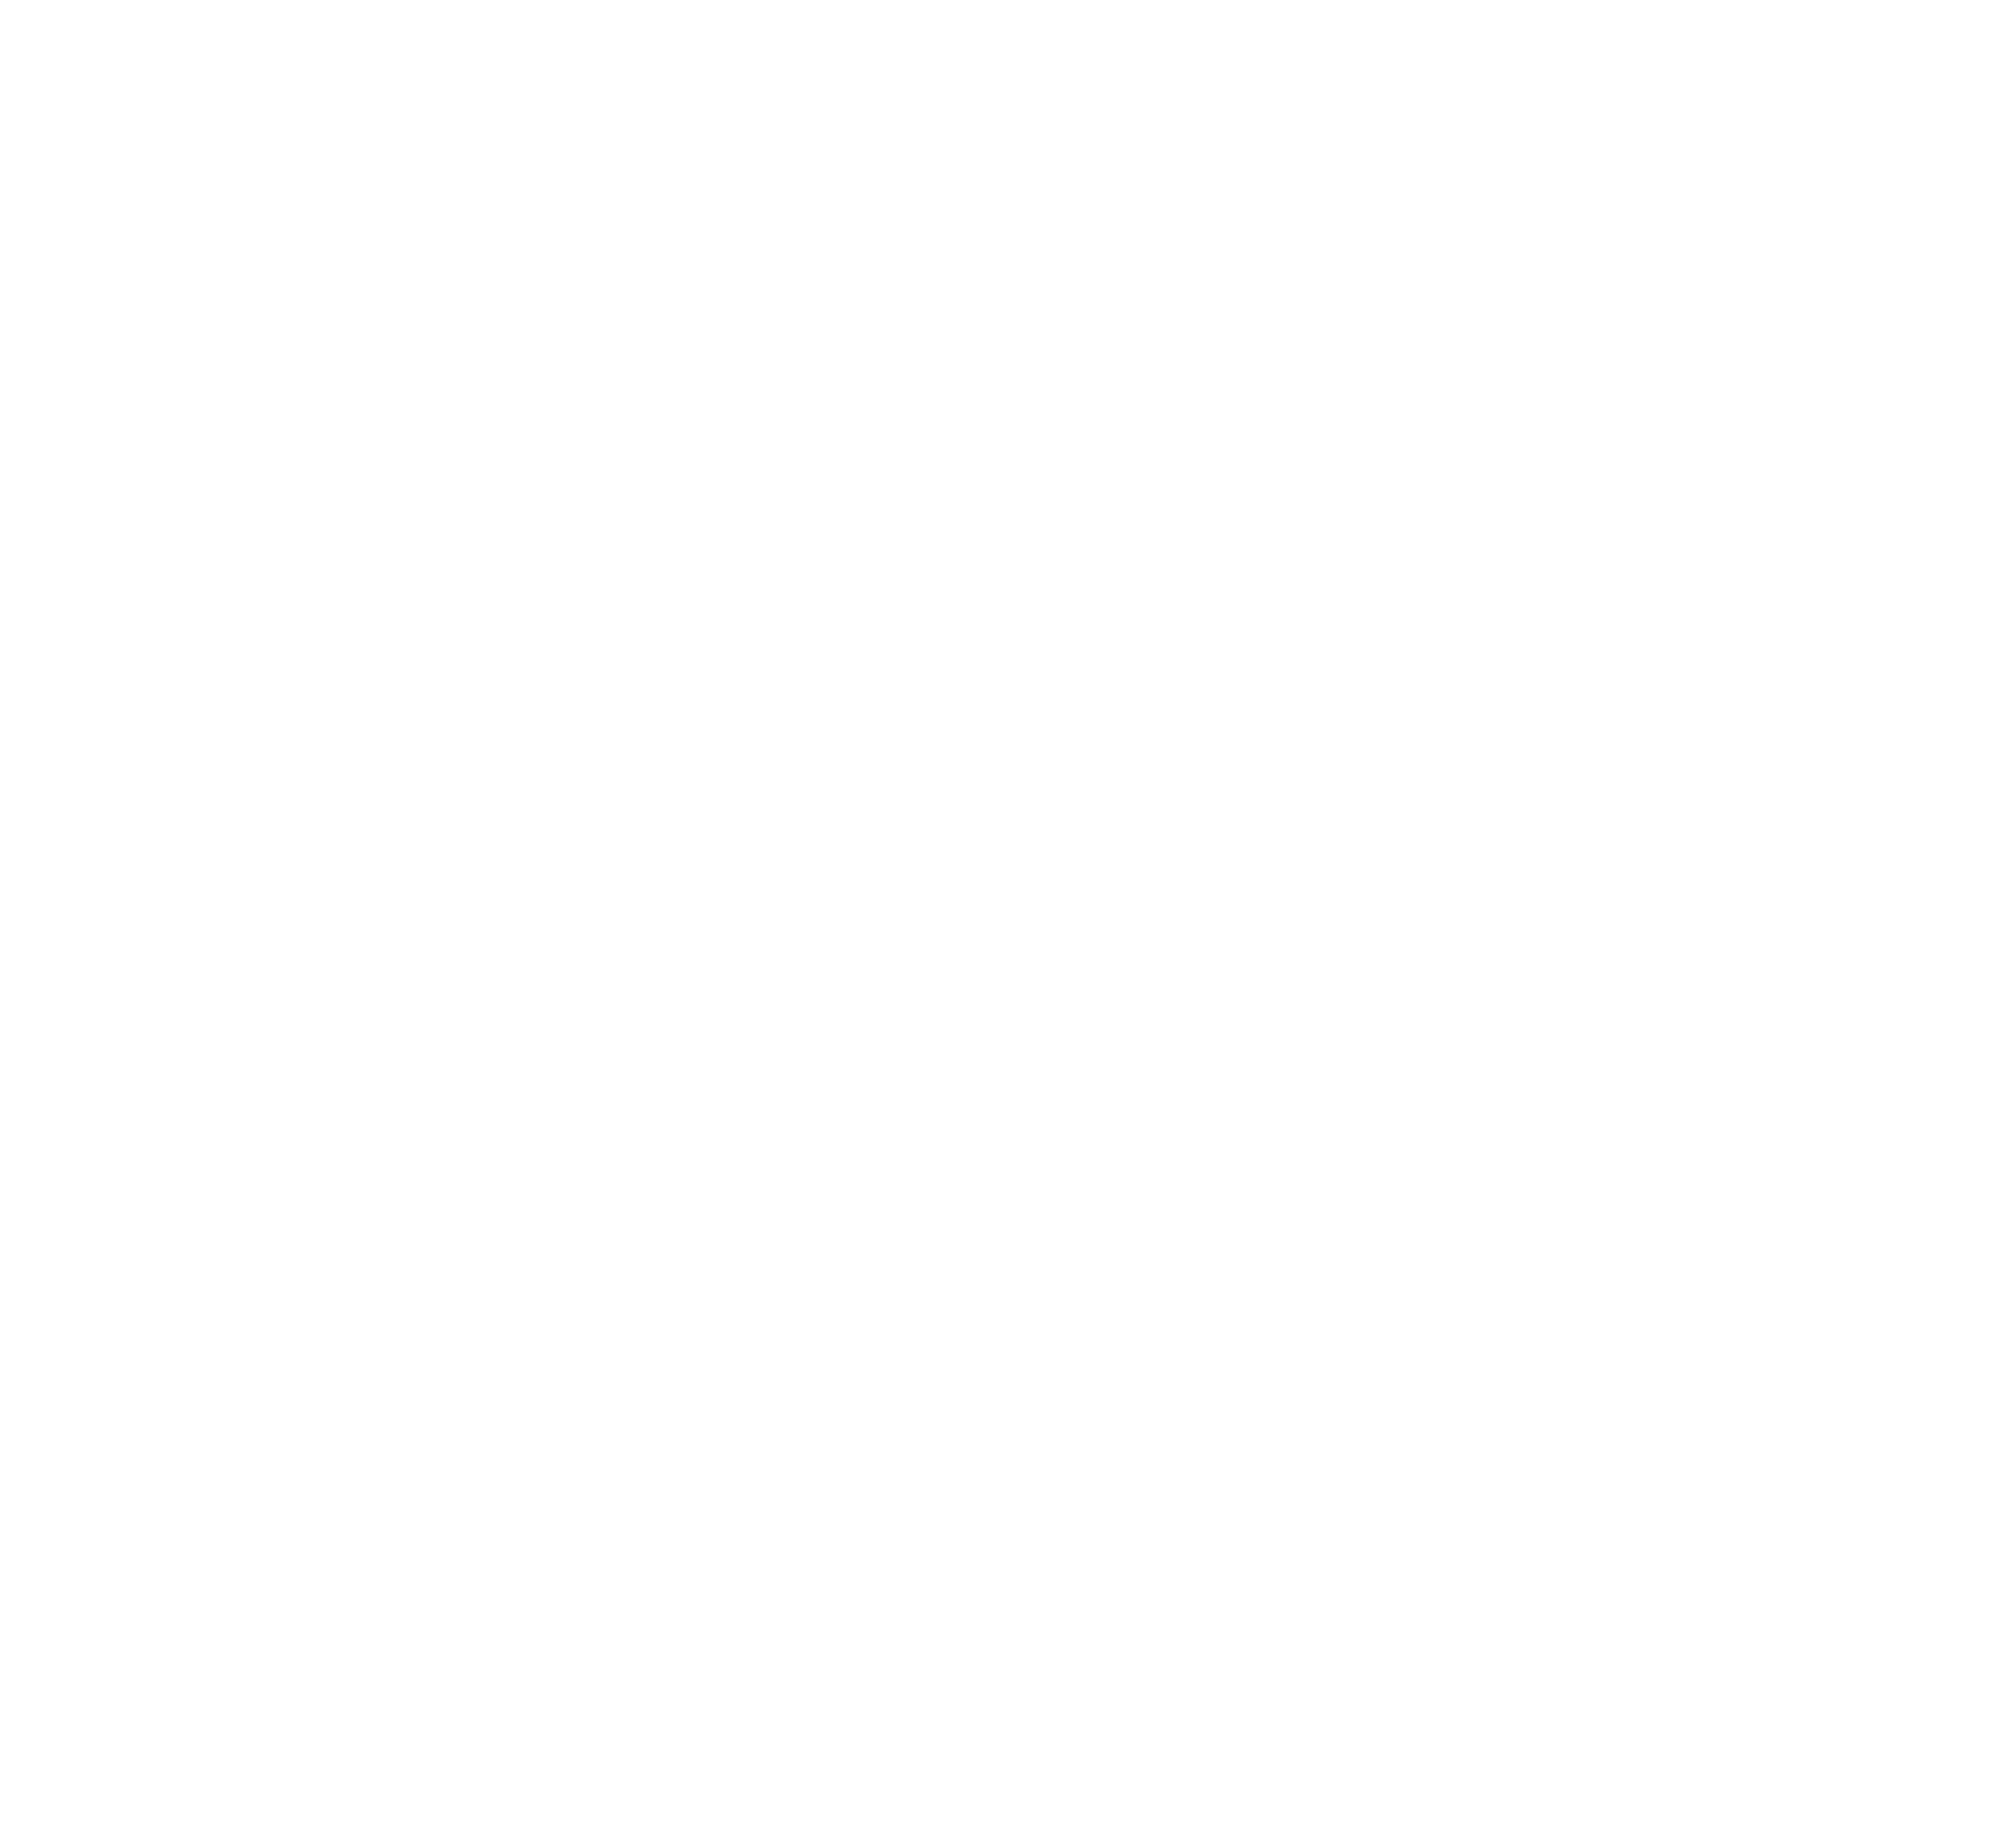 The Island of Lies